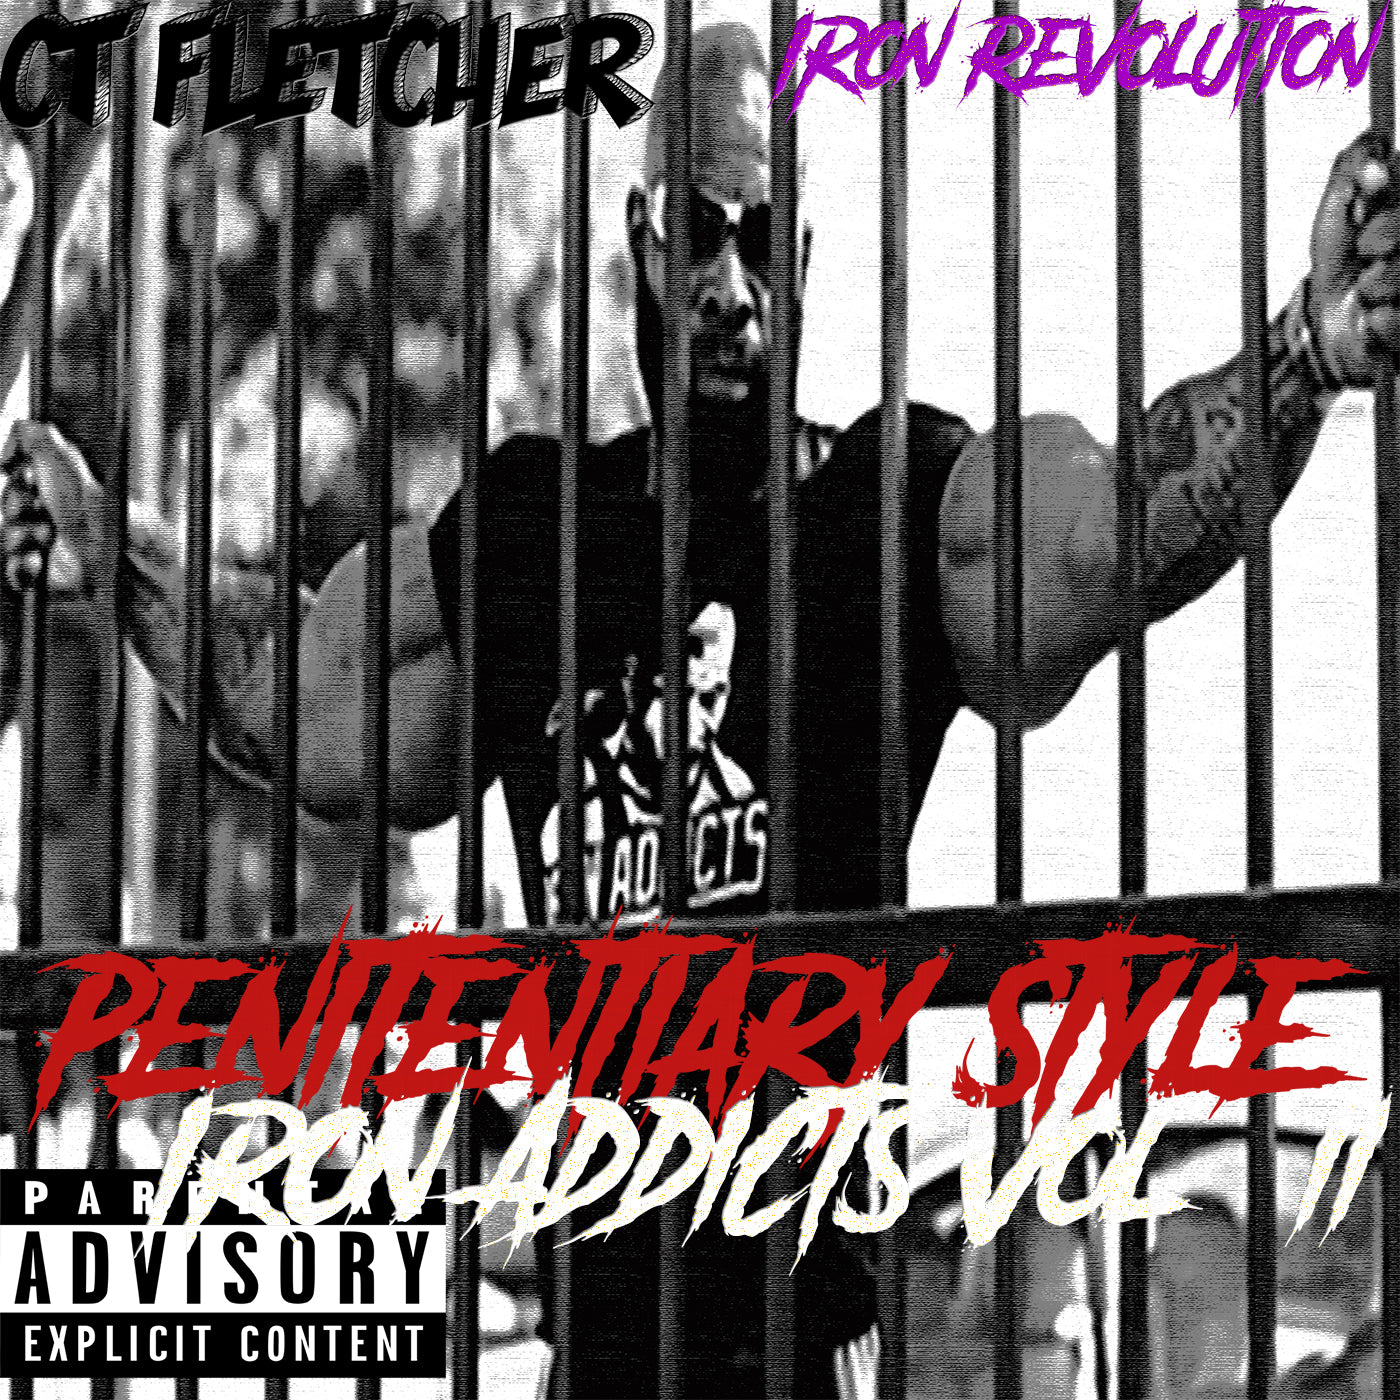 CT Fletcher - Iron Addict Vol 2: Penitentiary Style